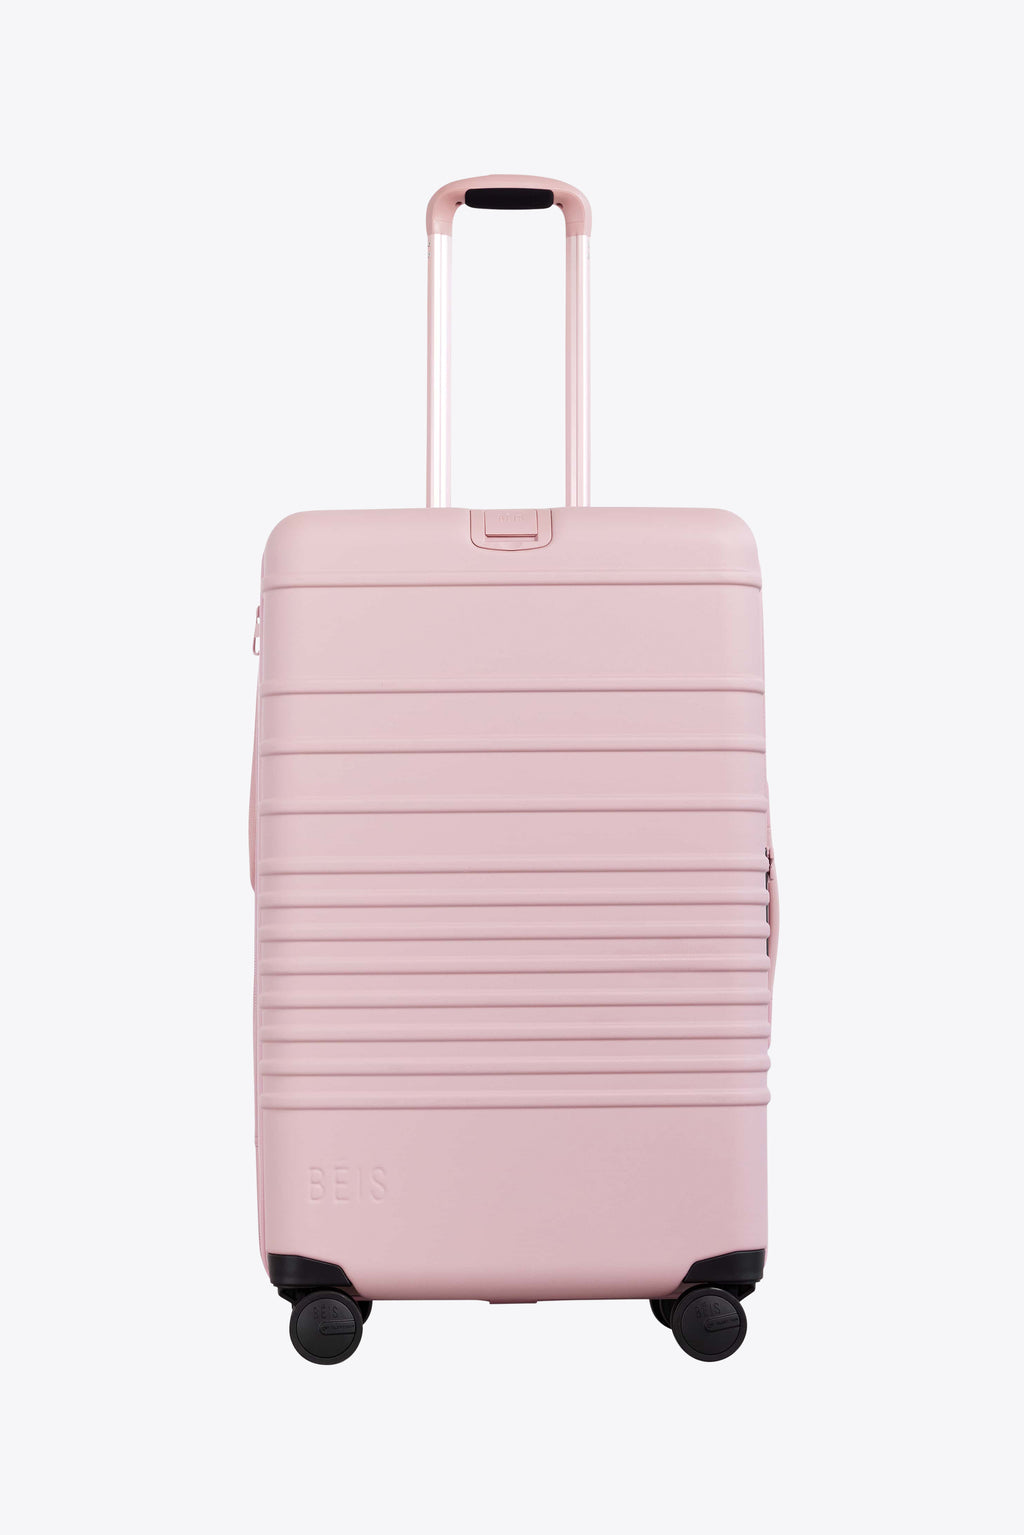 Shell Shape Felt Liner Bag Women Handbags Inner Bags Accessories